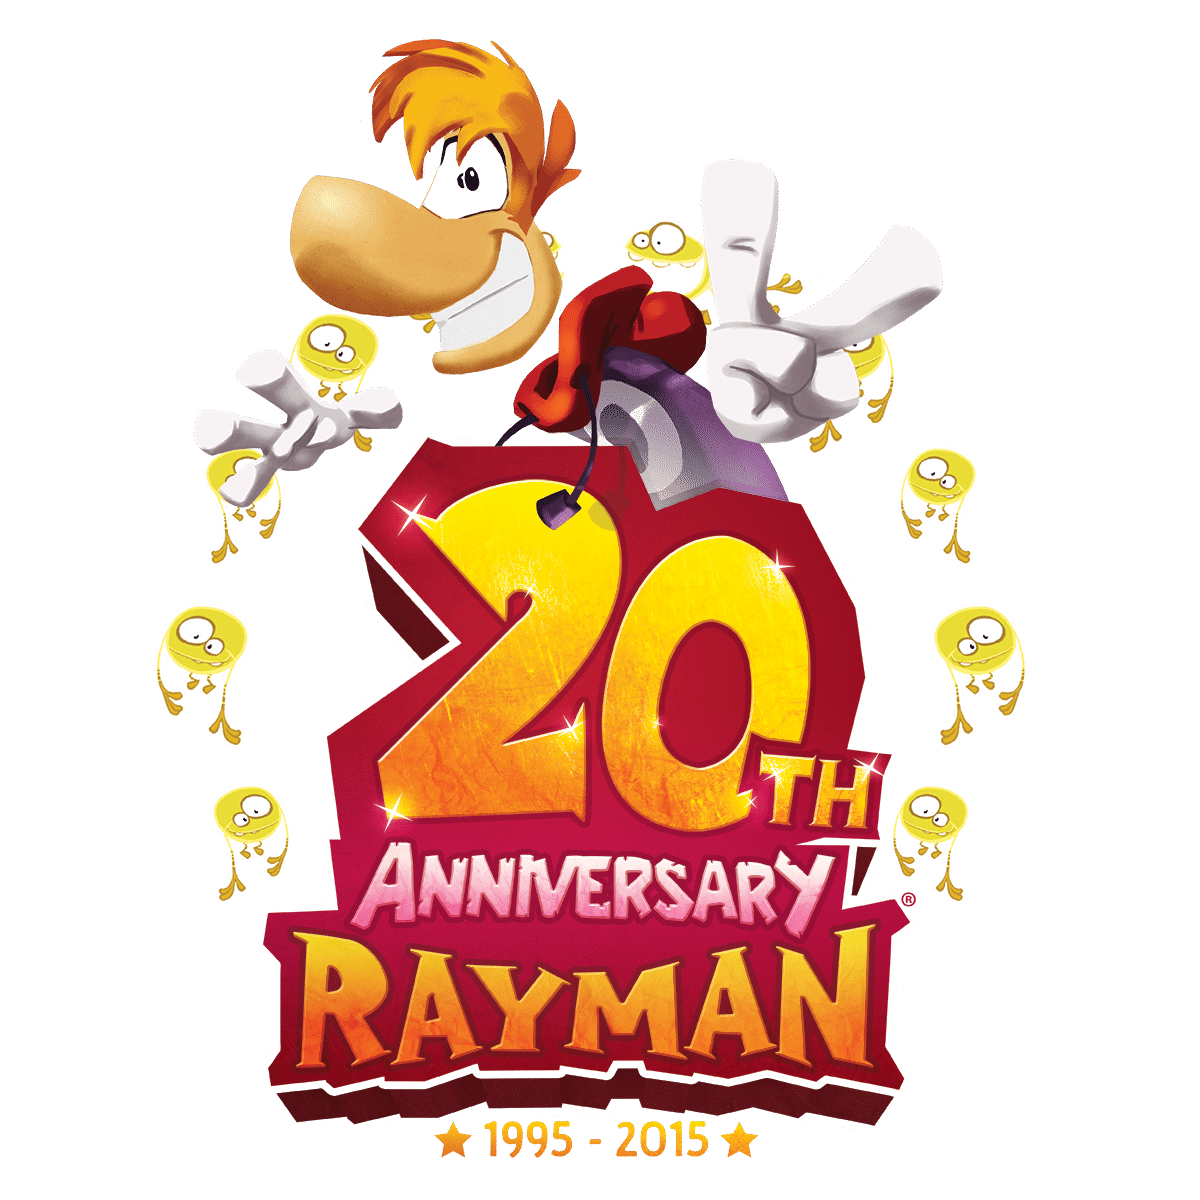 Rayman_Brand_Anniversary_logo_Vertical_151117_3PM_CET